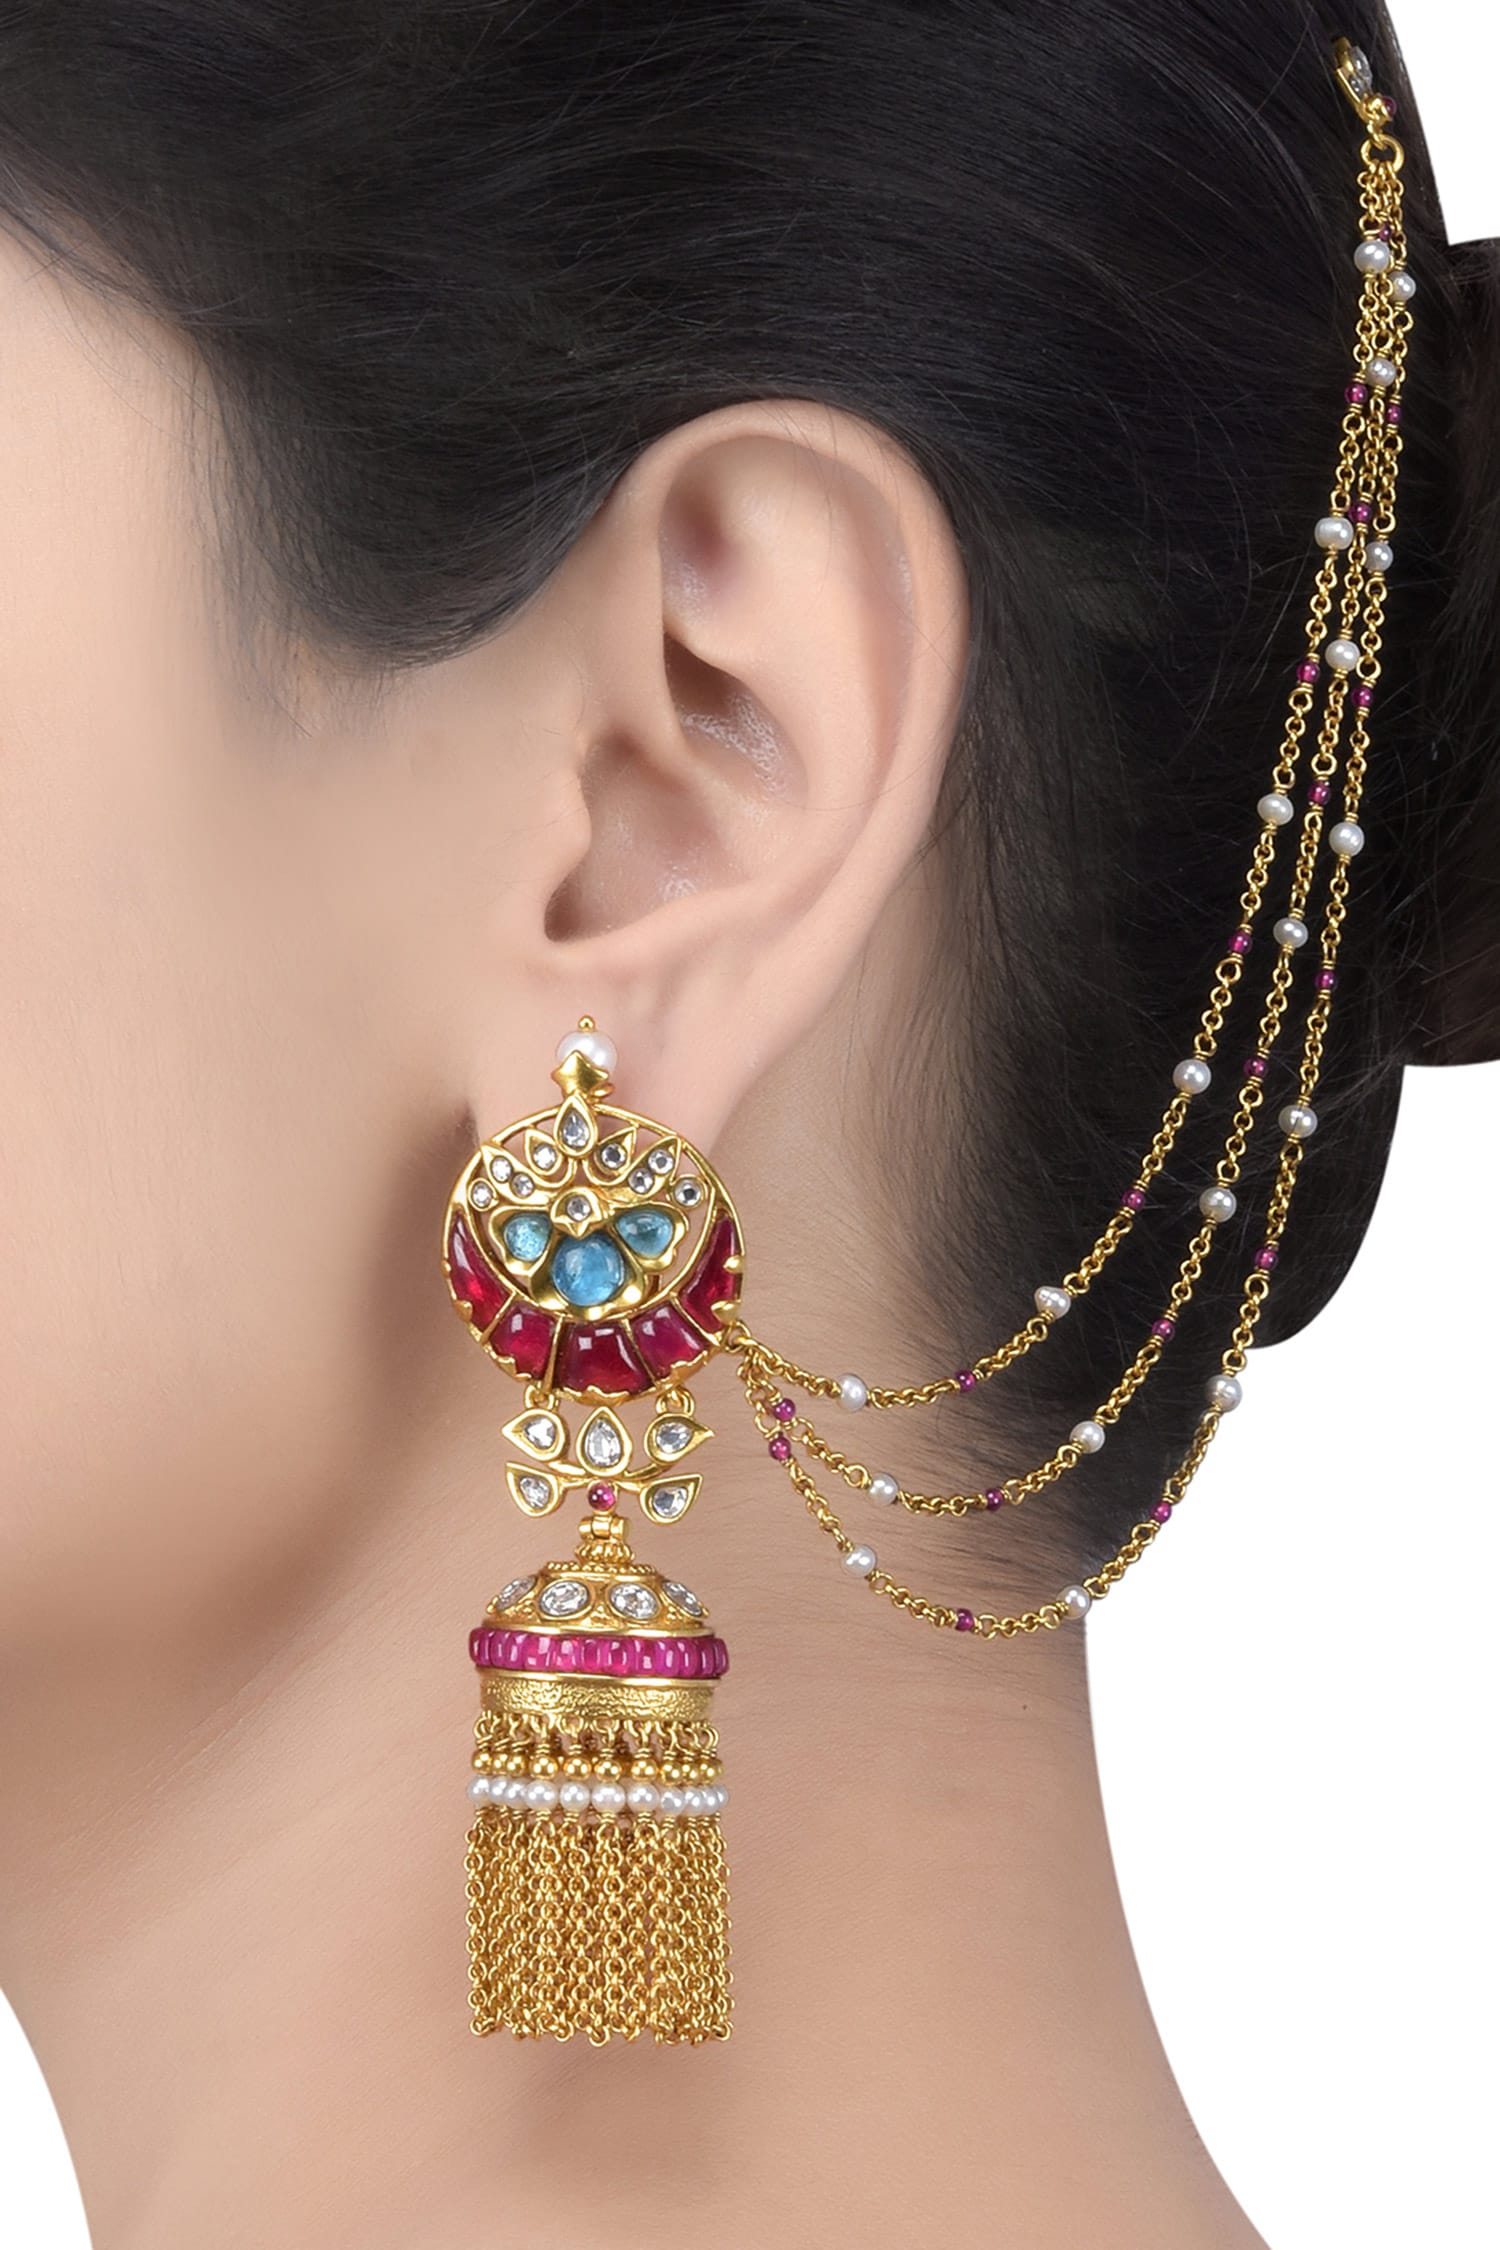 Gold Plated Kundan Jhumka Earrings with Hair Chain  Kundan Earrings   Indian Jhumka Earrings  Indian Jewelry  JewelryWith 1 free gift